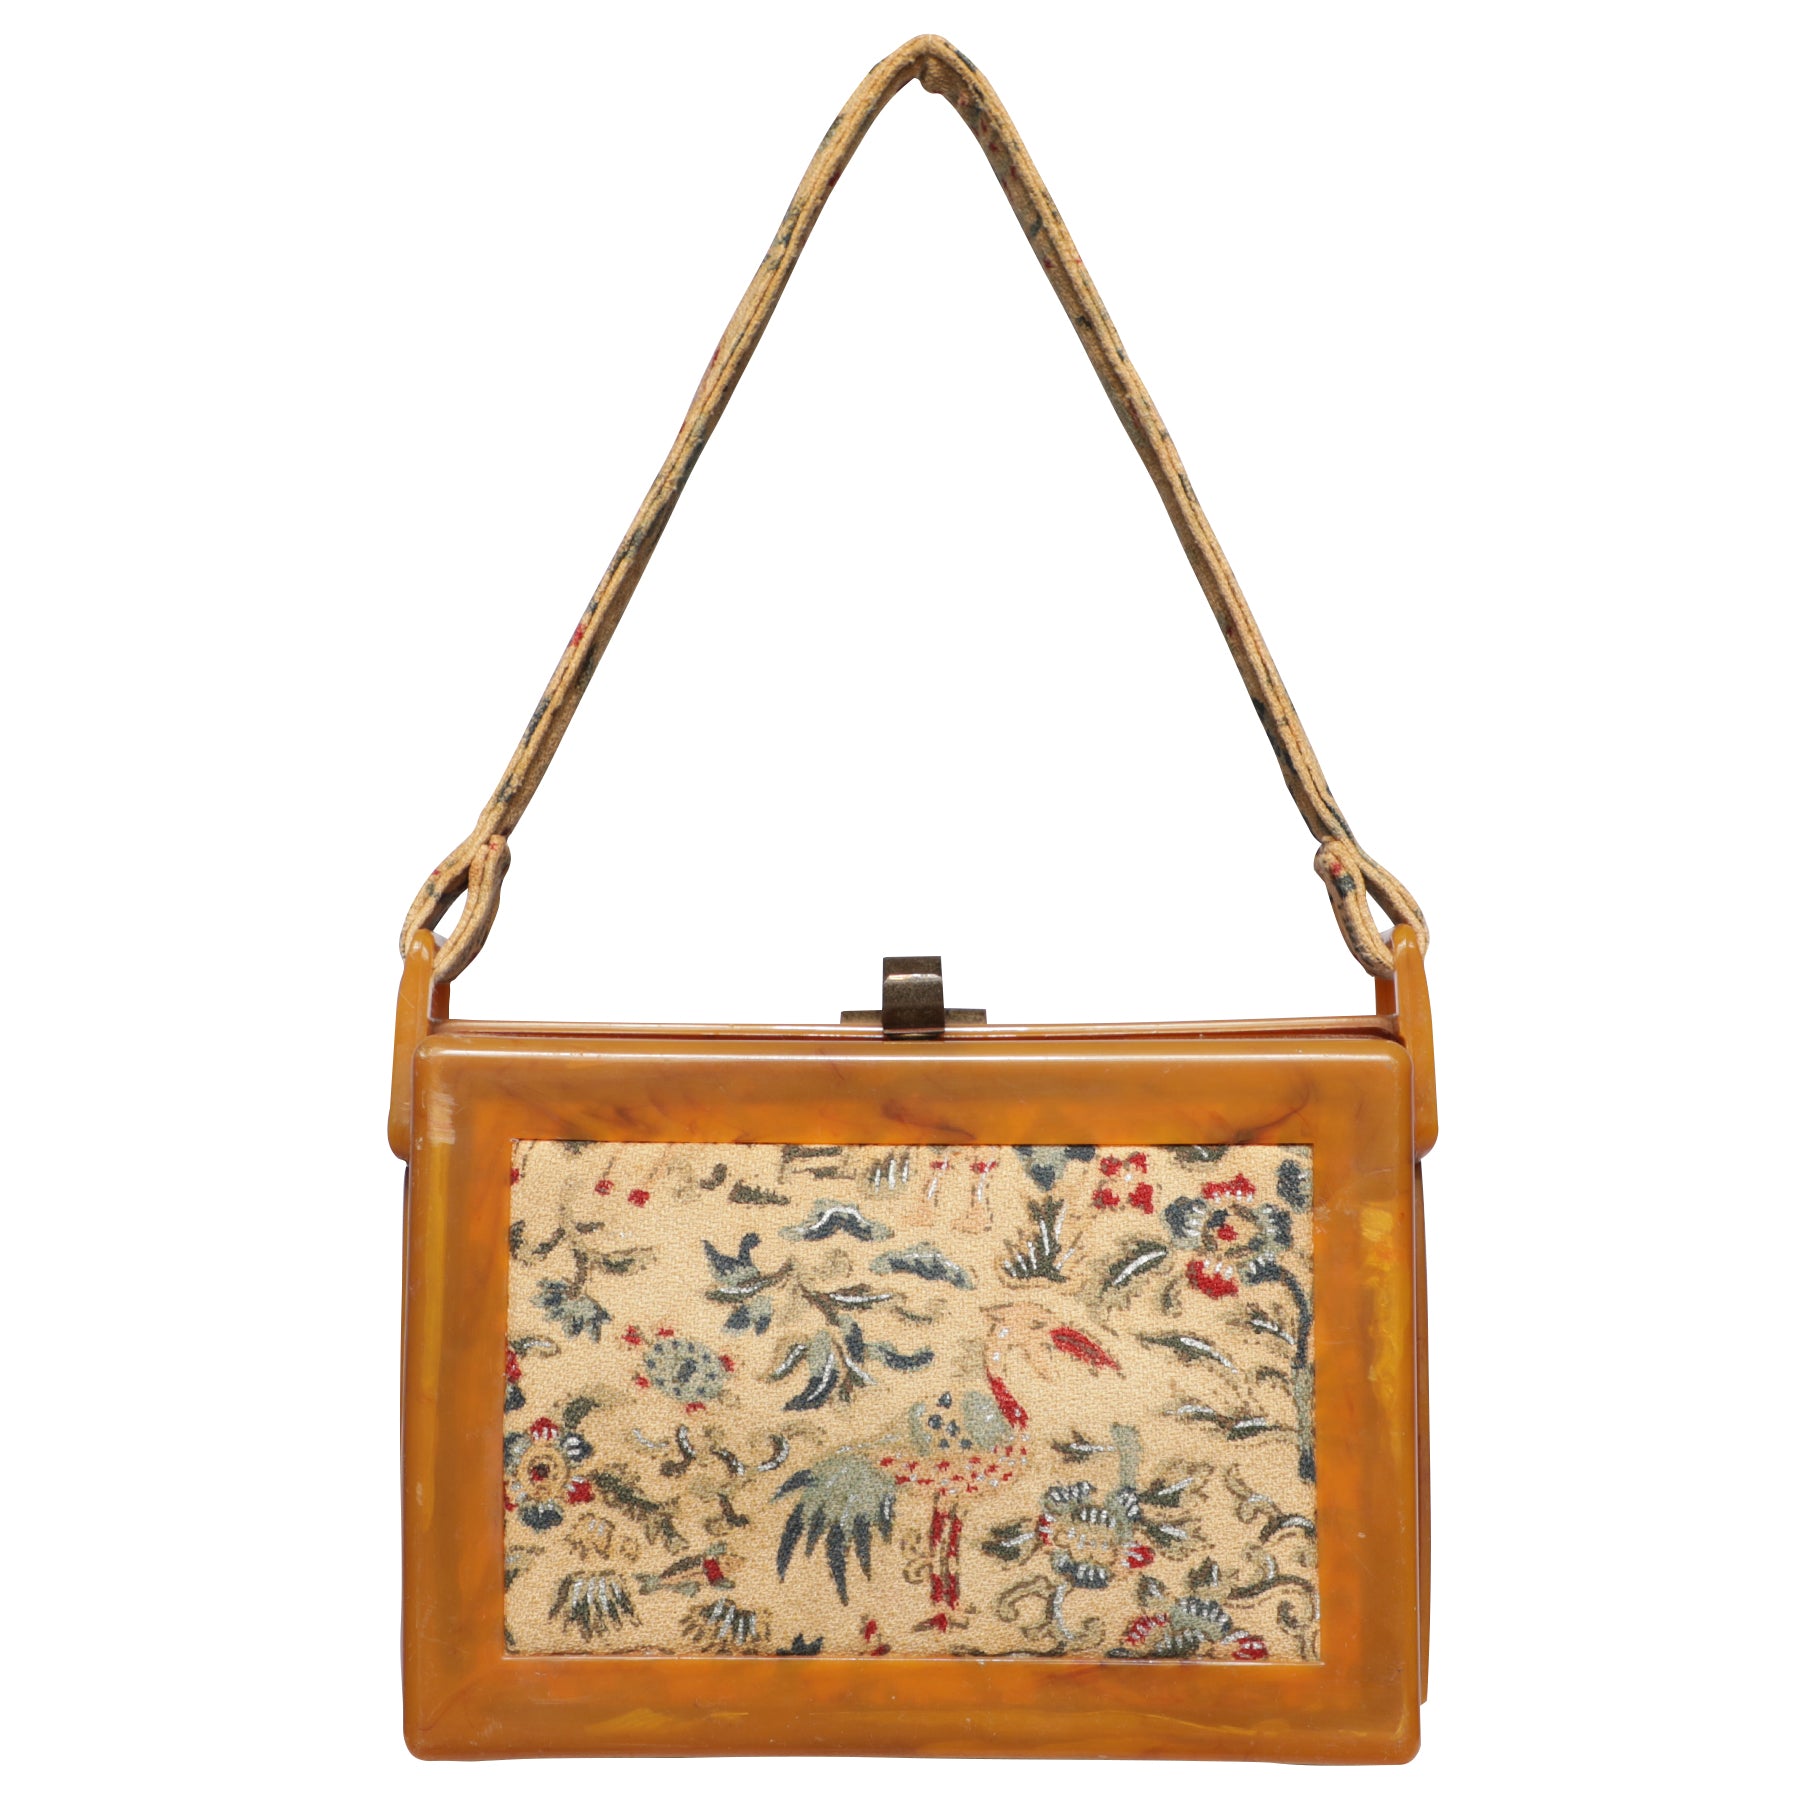 Shop Vintage Everyday Casual Purses & Handbags – Quirky Finds